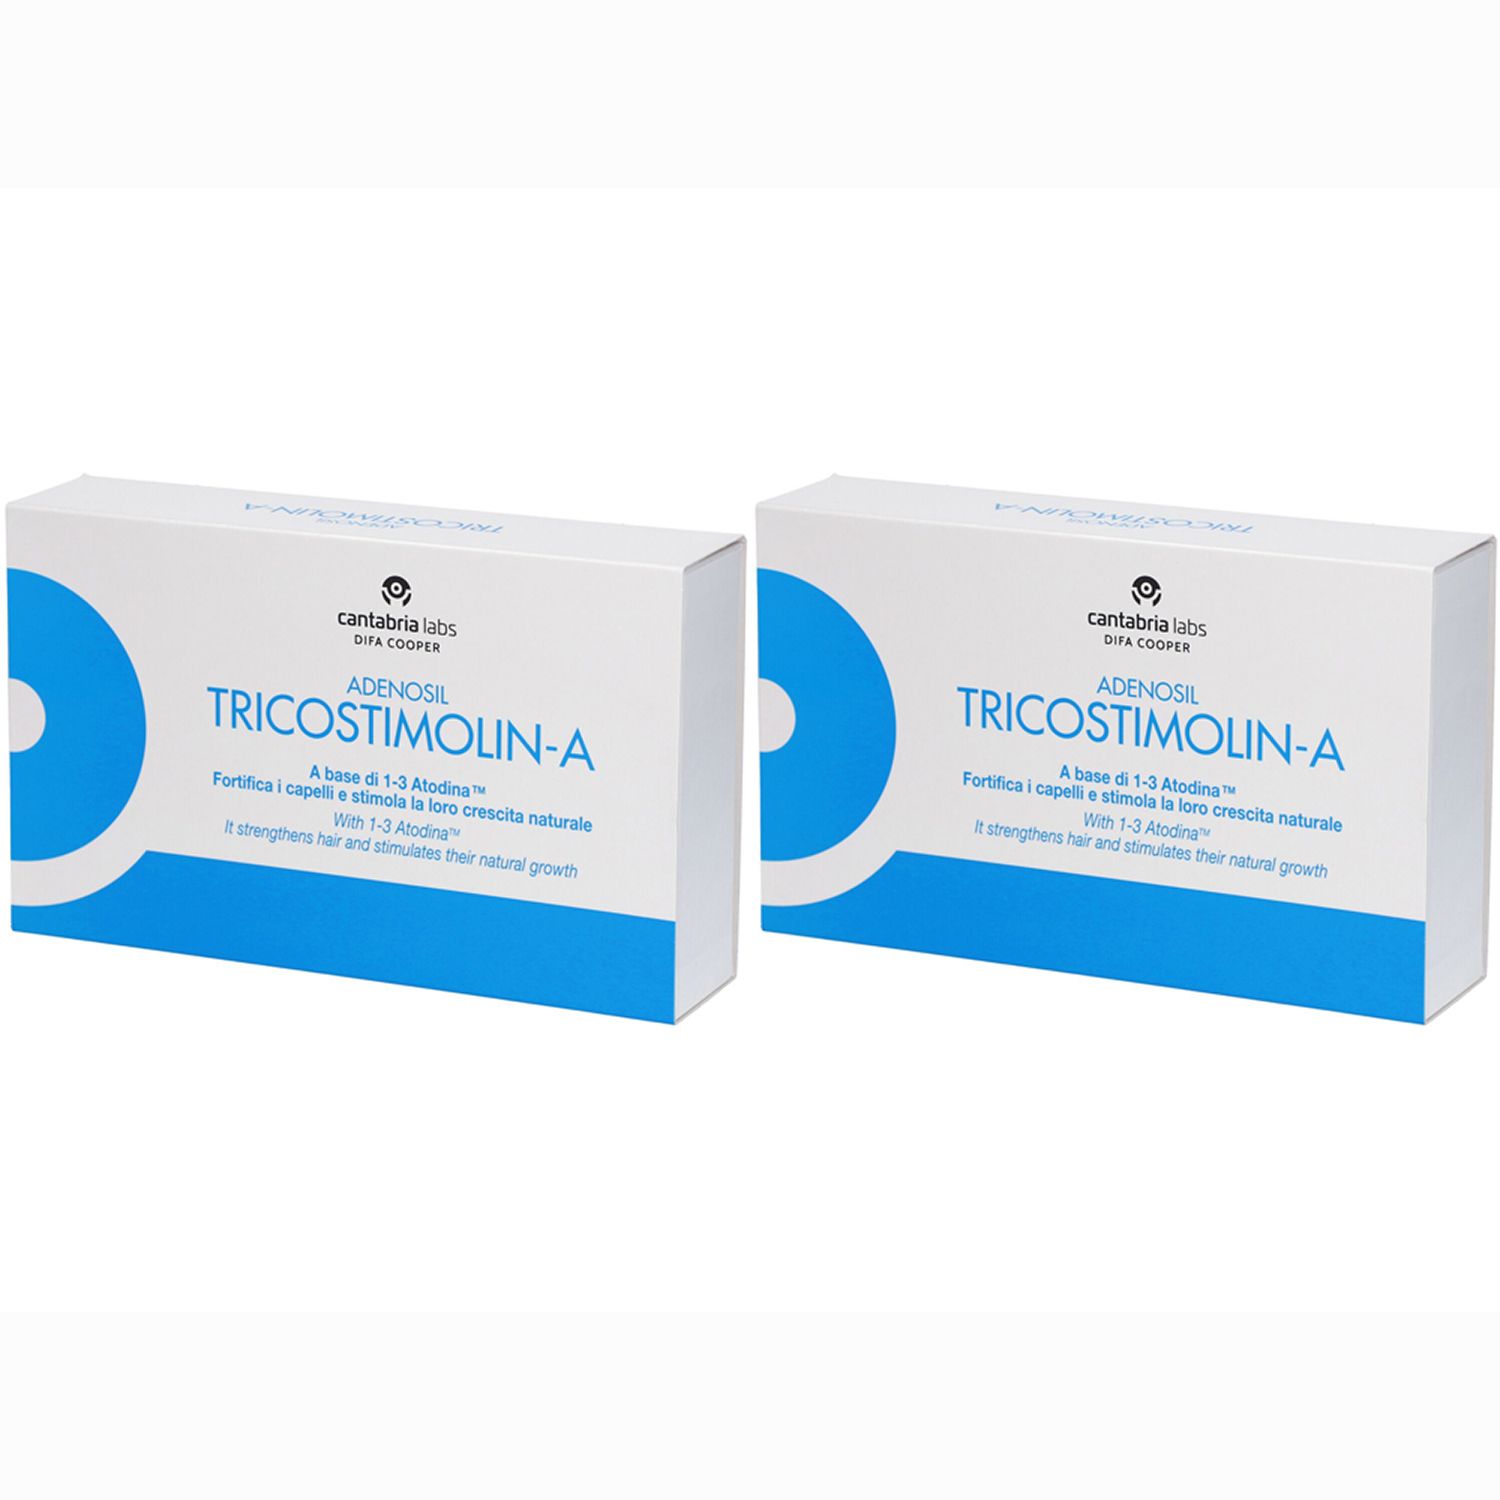 Tricostimolin-A